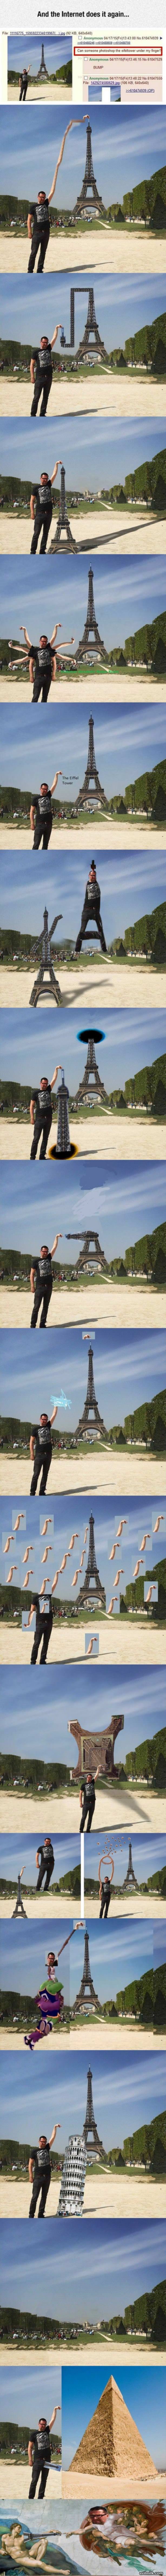 Eiffel Tower Tourist Photoshop